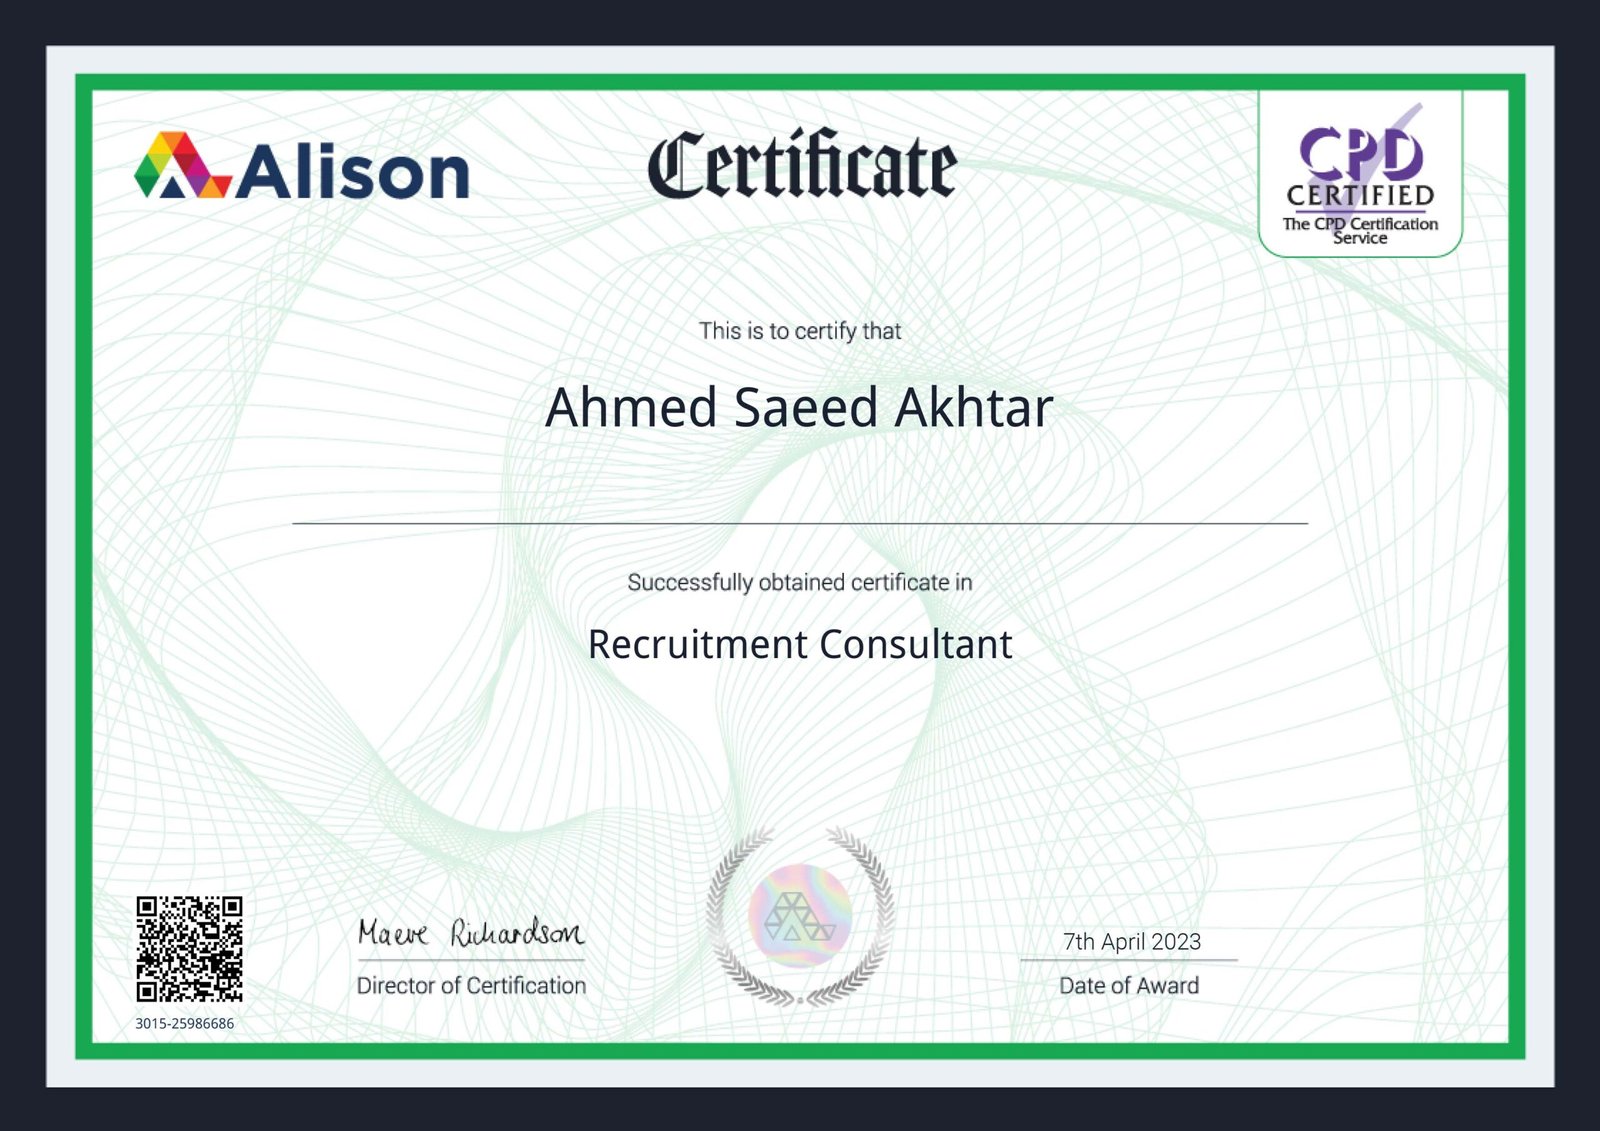 Alison_Certificate